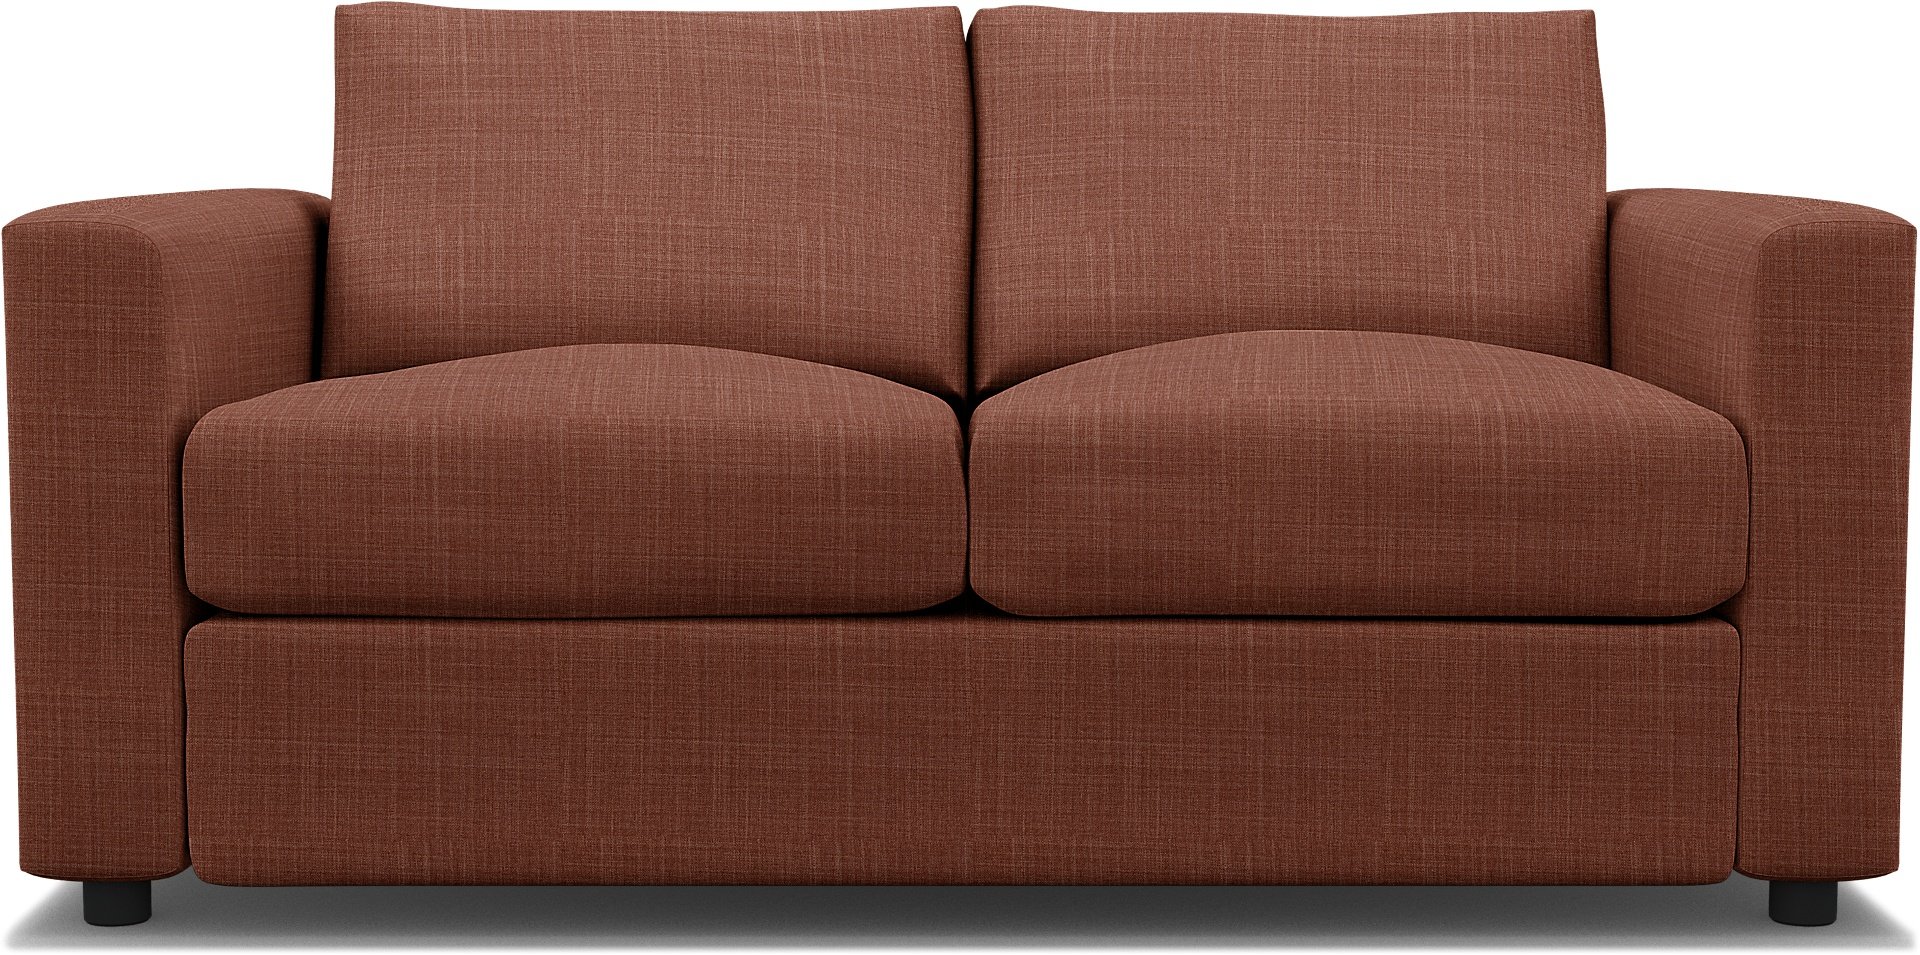 Vimle 2 Seater Sofa Bed Cover | Bemz